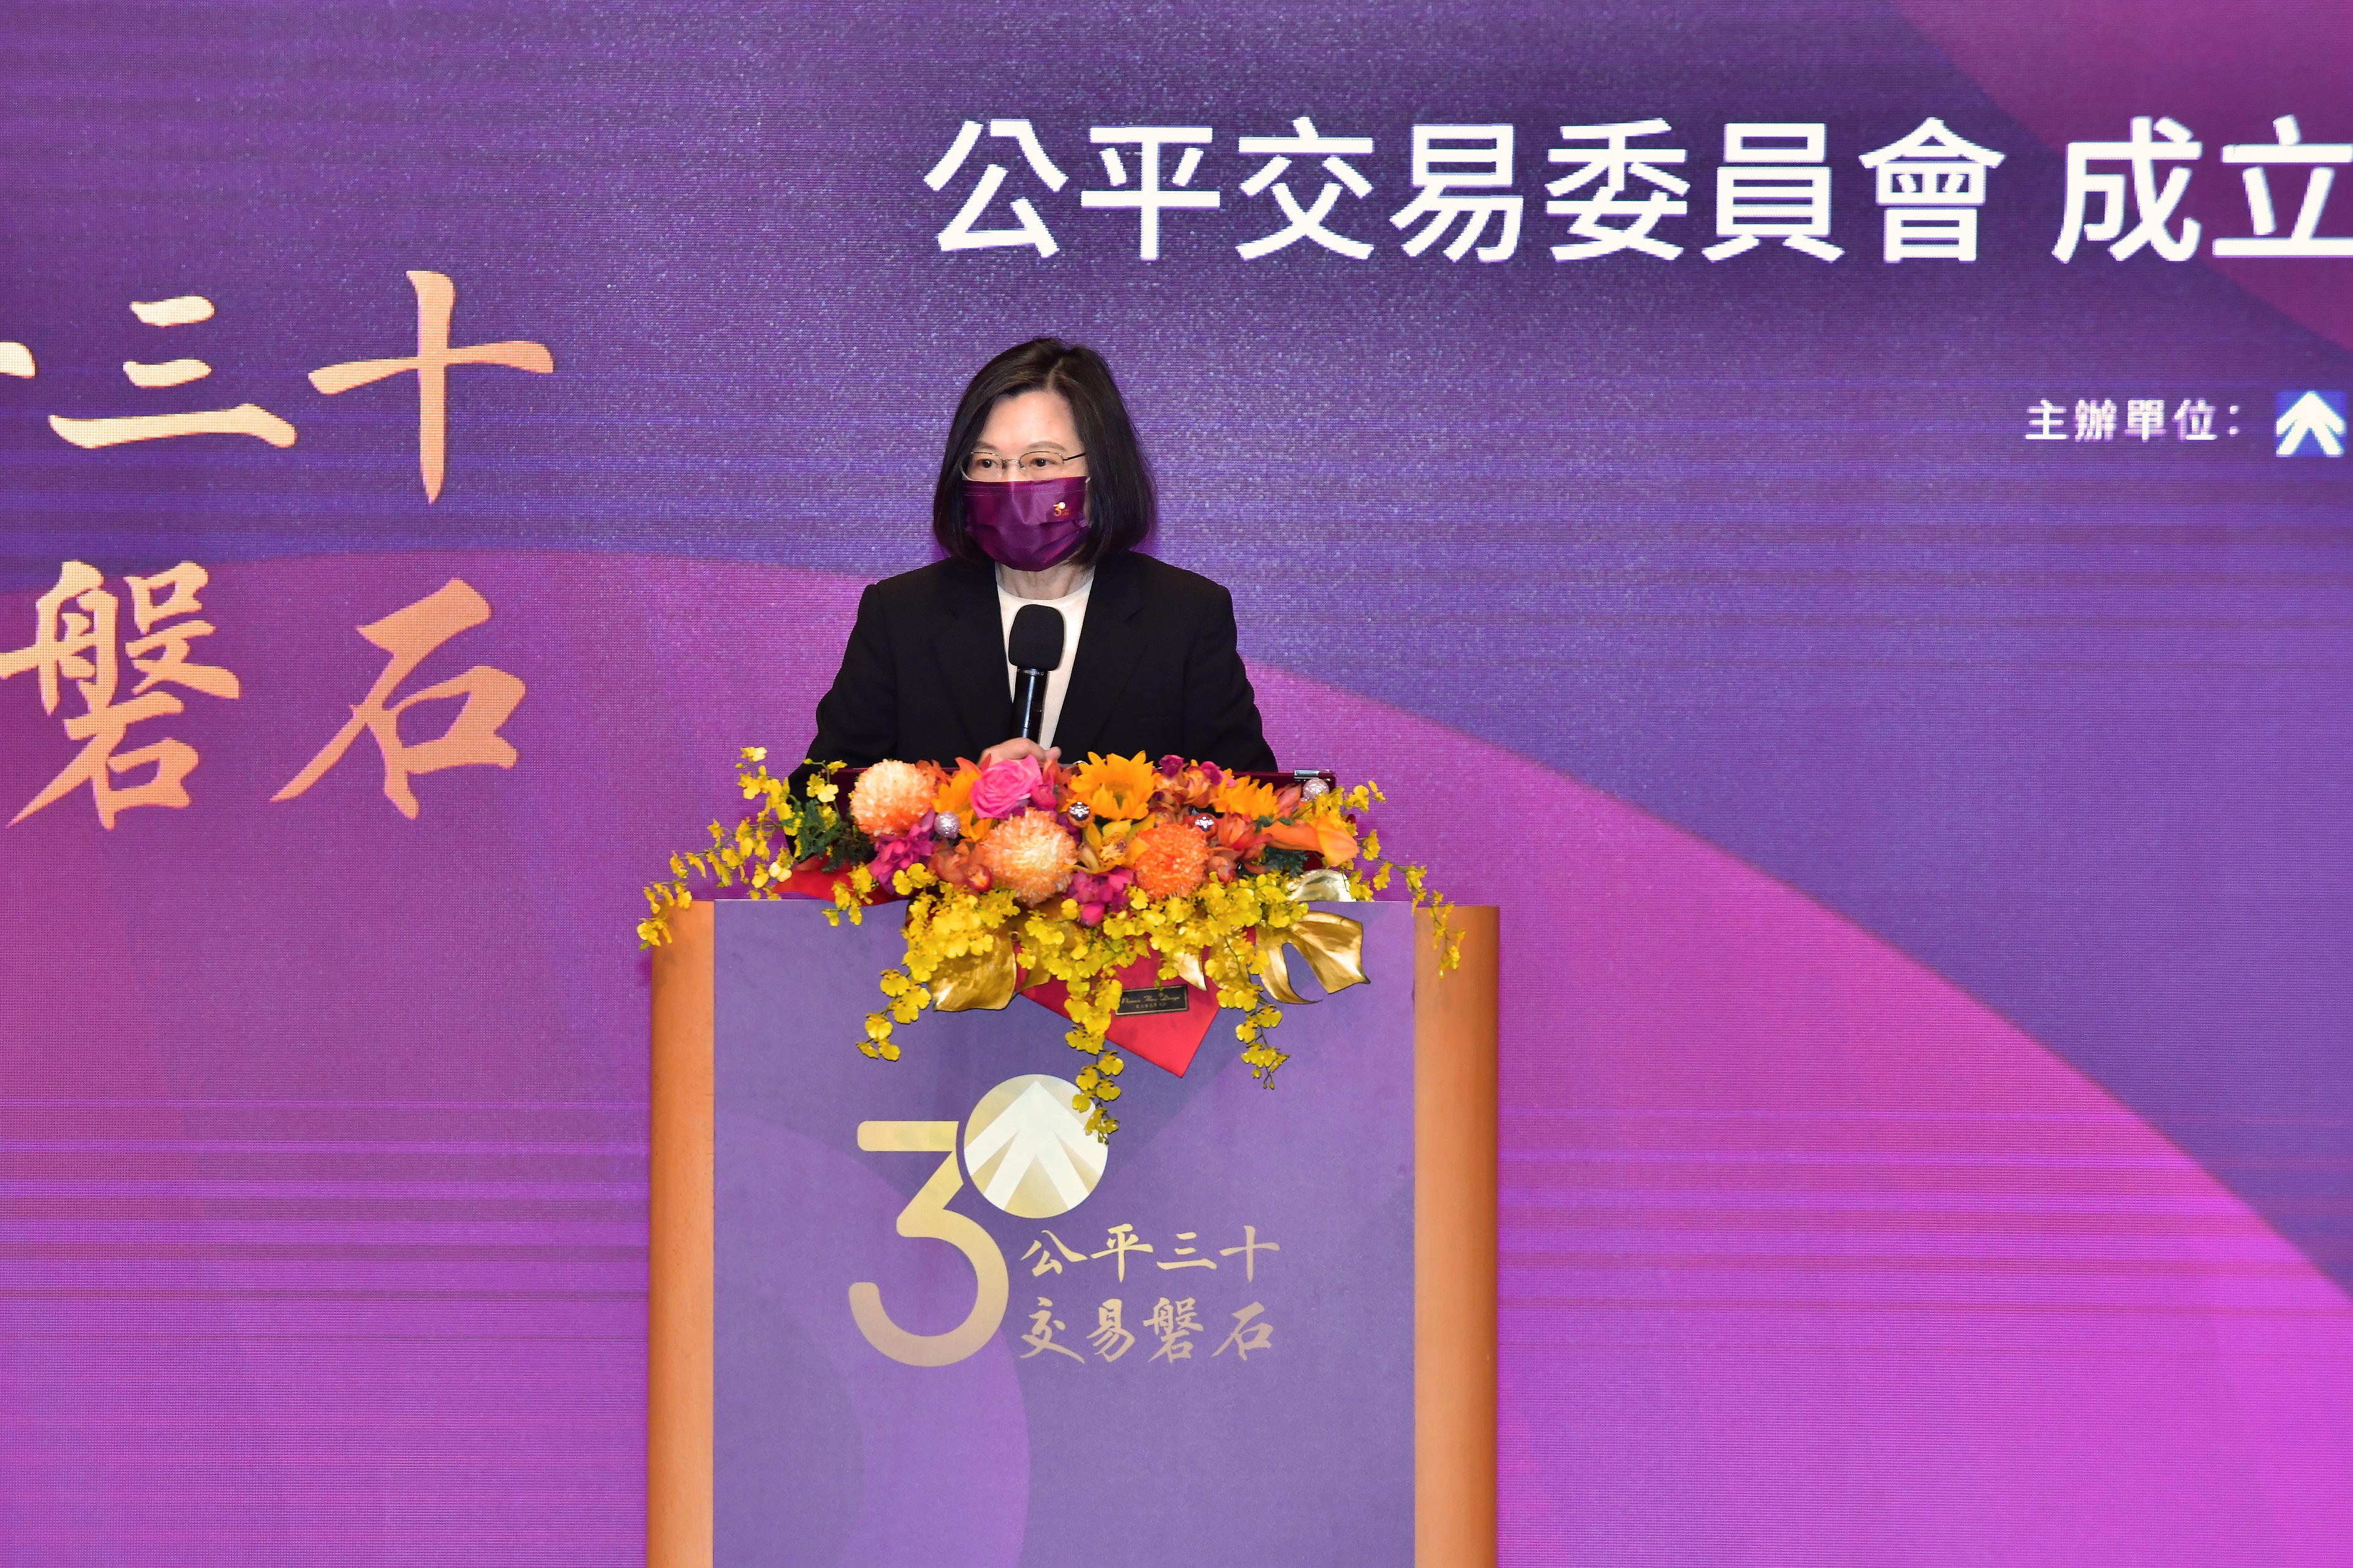 President Tsai Ing-wen giving a speech during the FTC